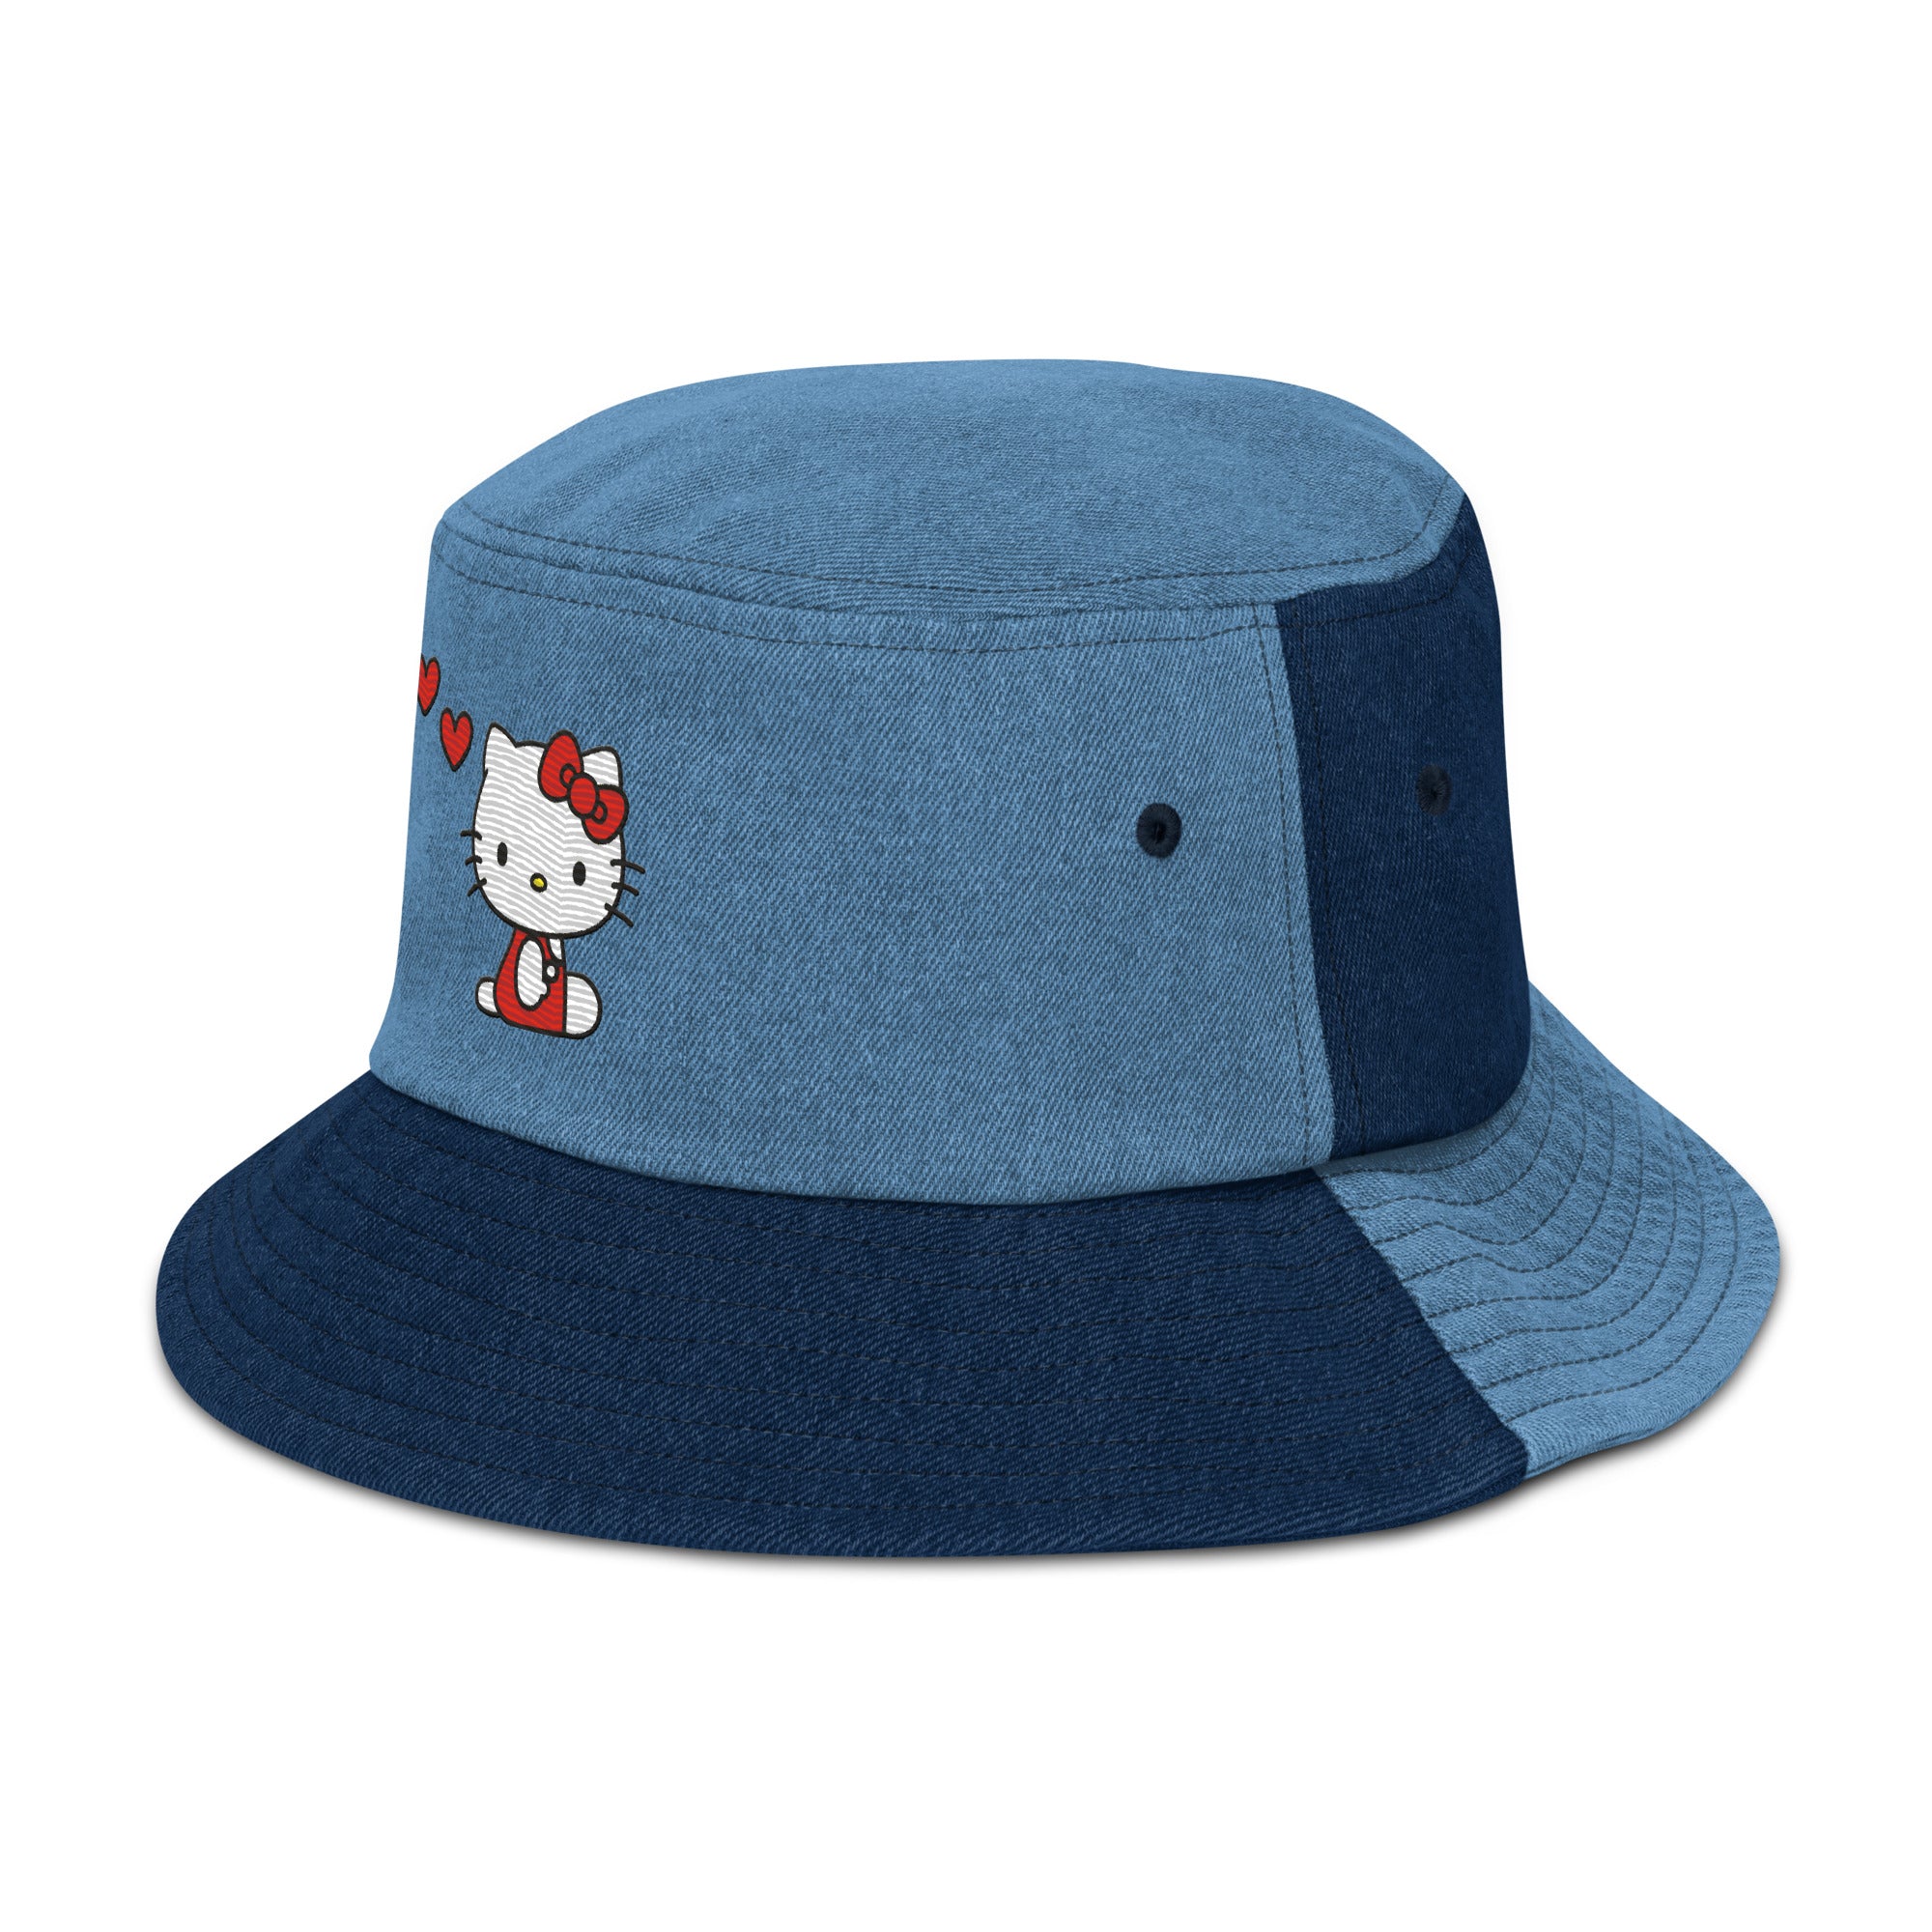 Hello Kitty Embroidered Denim Bucket Hat Accessory Printful Classic / Light Denim  